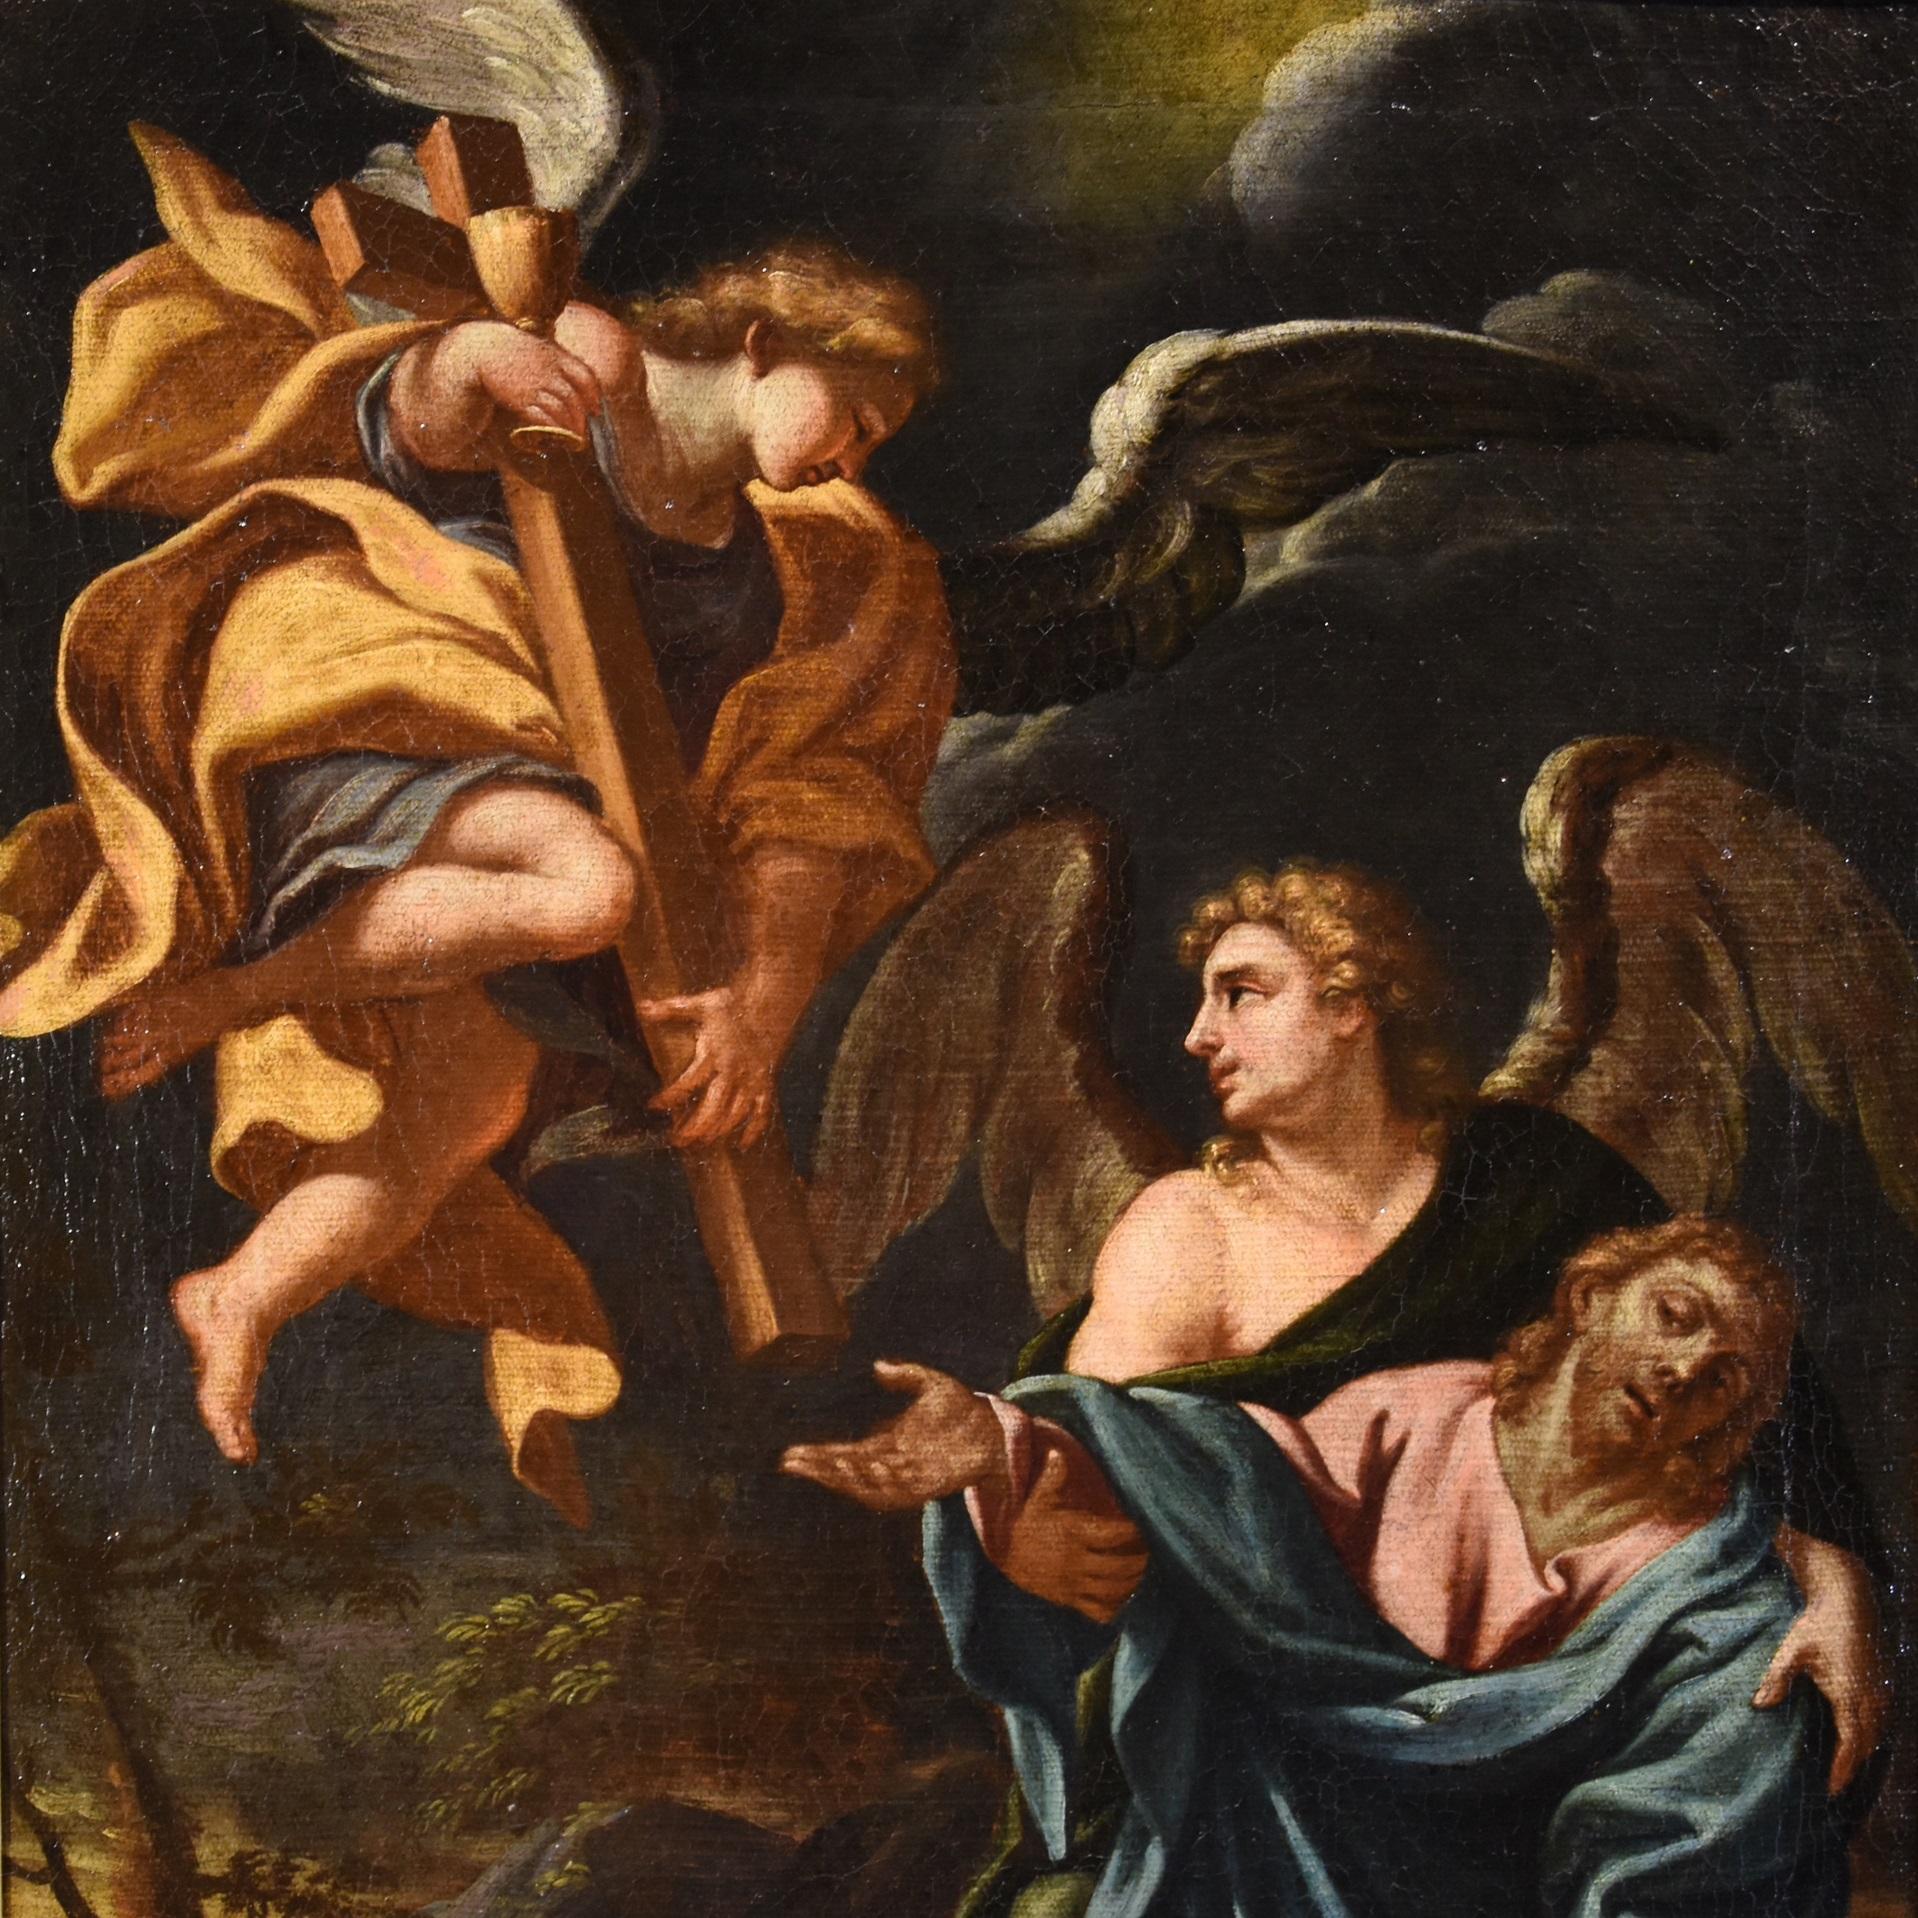 Christ Angels Pietro Da Cortona Paint 17th Century Oil on canvas Old master Art 5